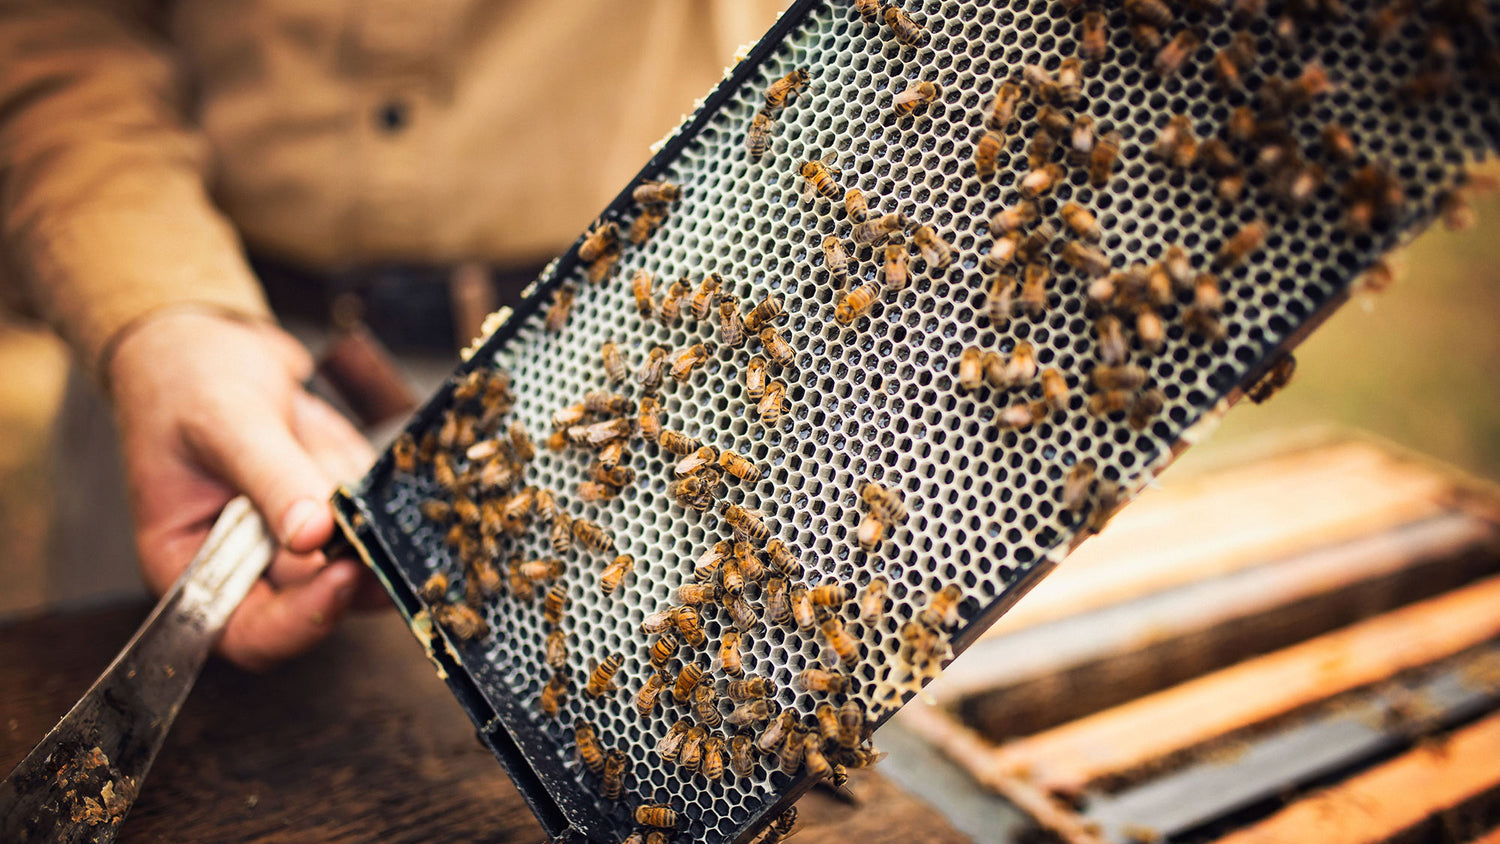 beekeeper showing bees working on beehive frame